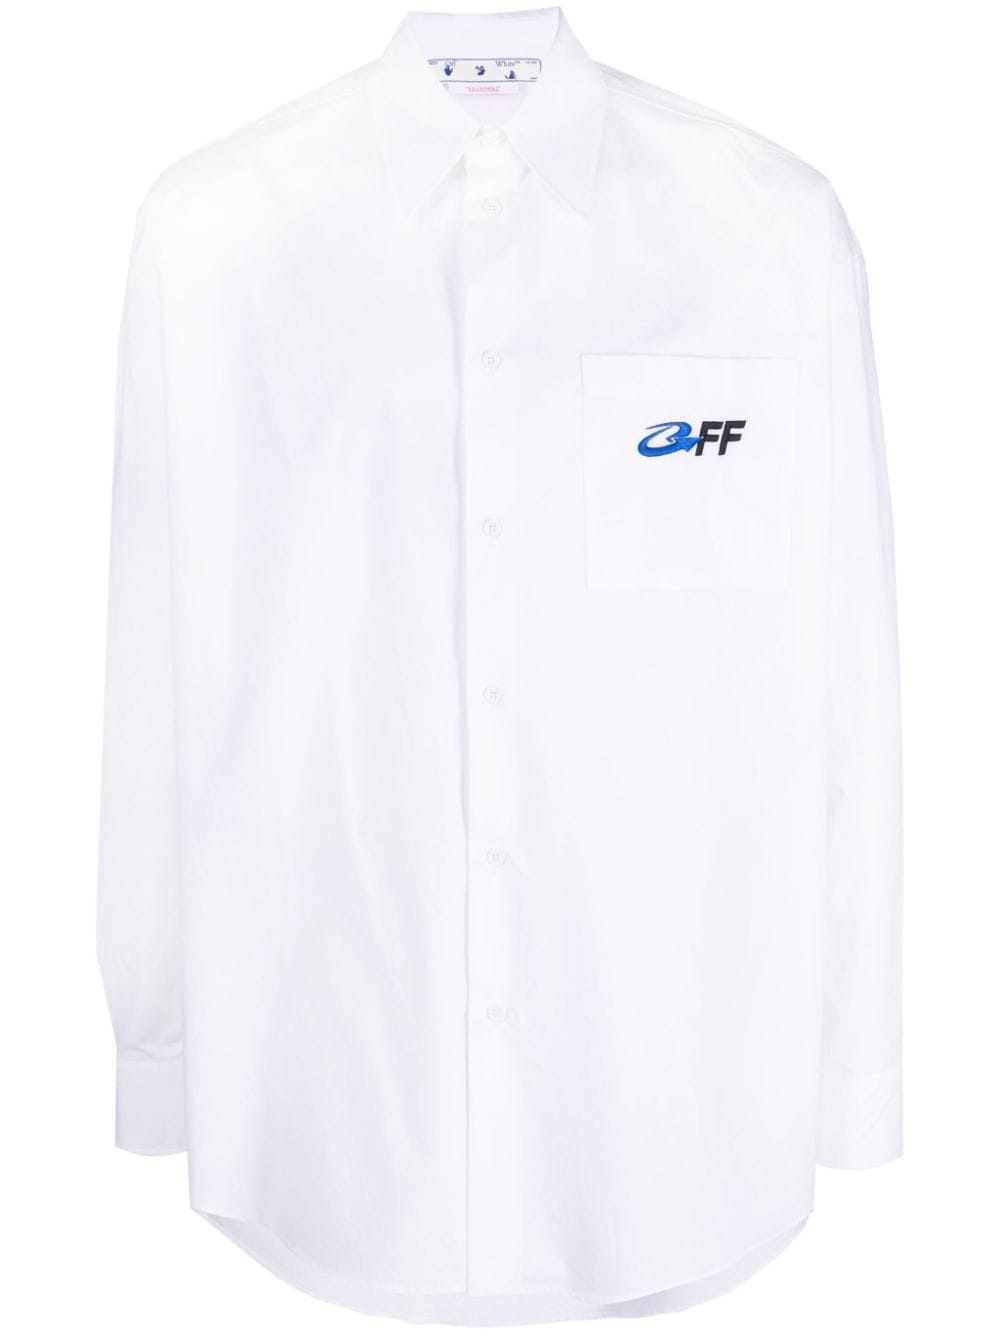 Exact Opp cotton shirt - 1